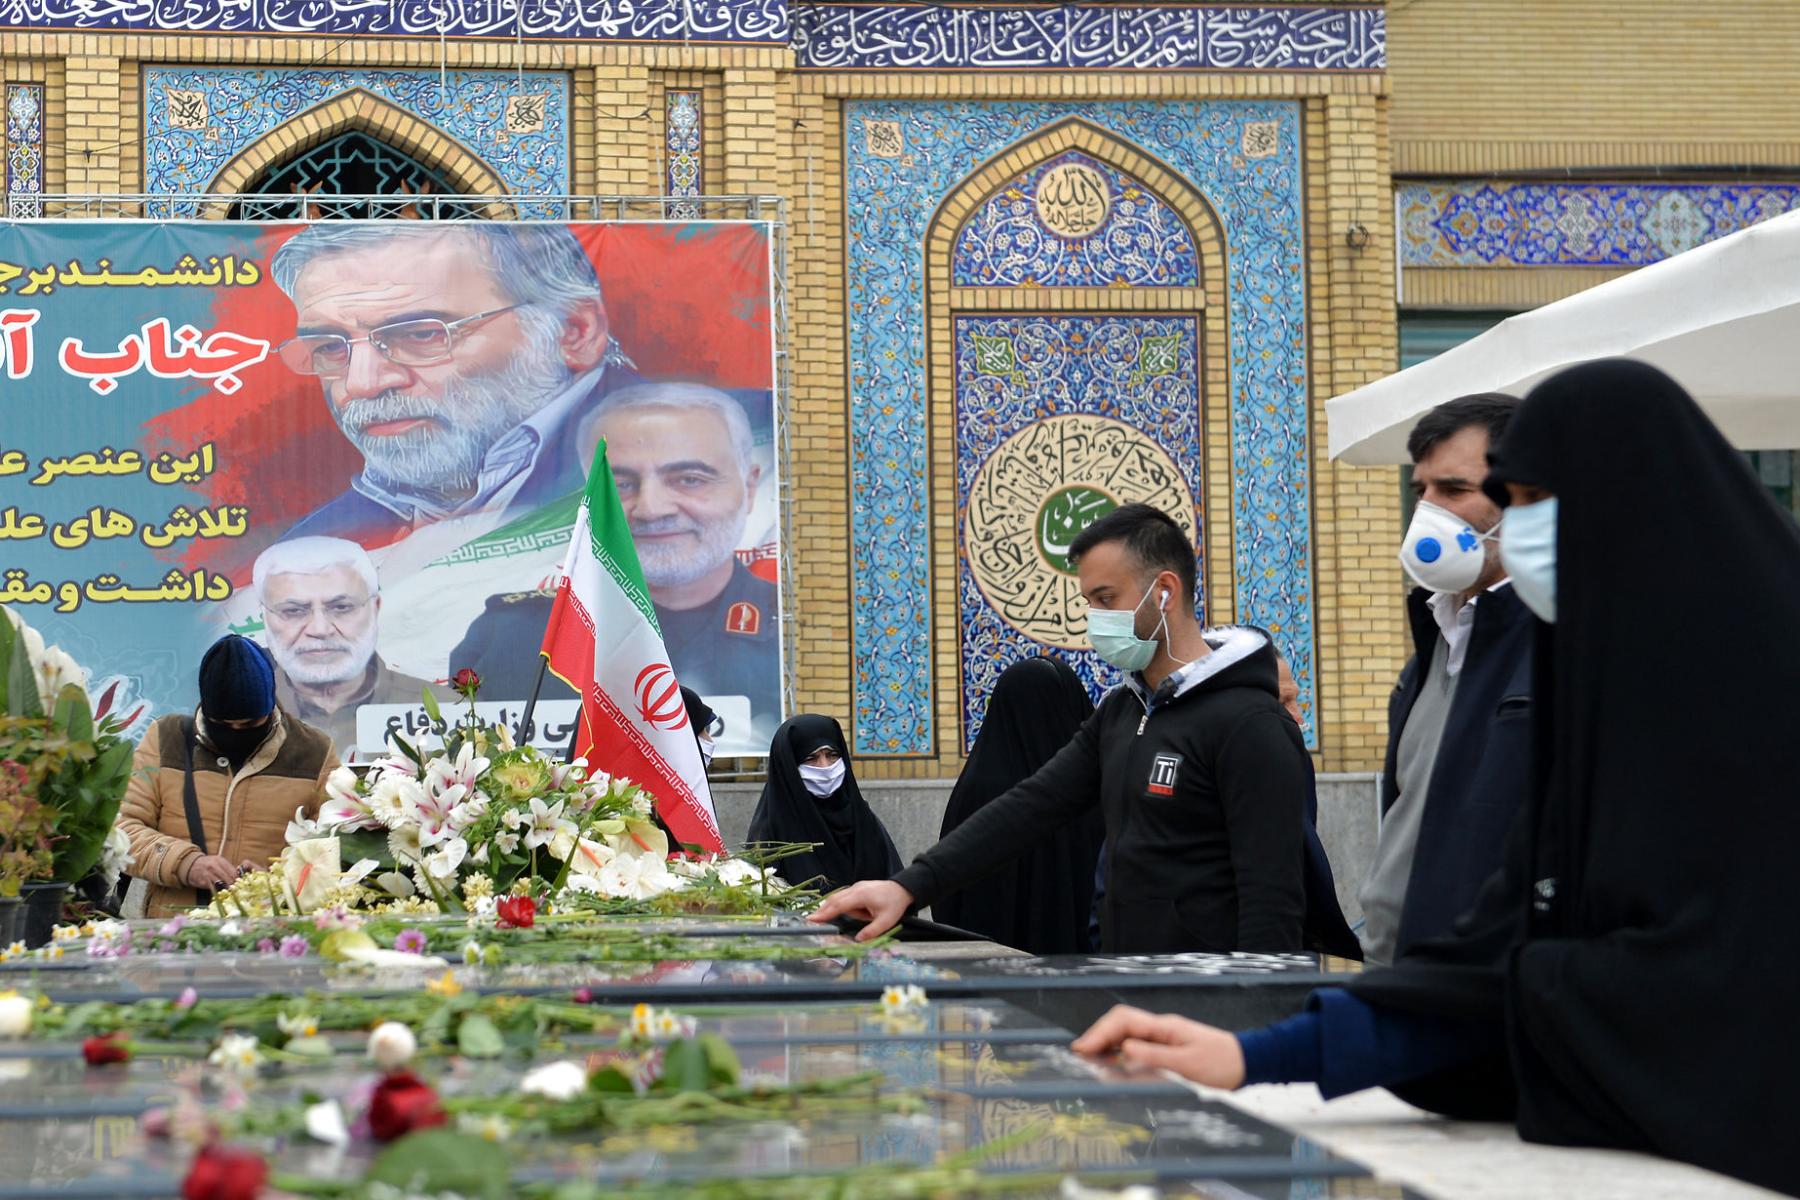 Iranian Nuclear Scientist Mohsen Fakhrizadeh Mahabadis grave in Tehran 